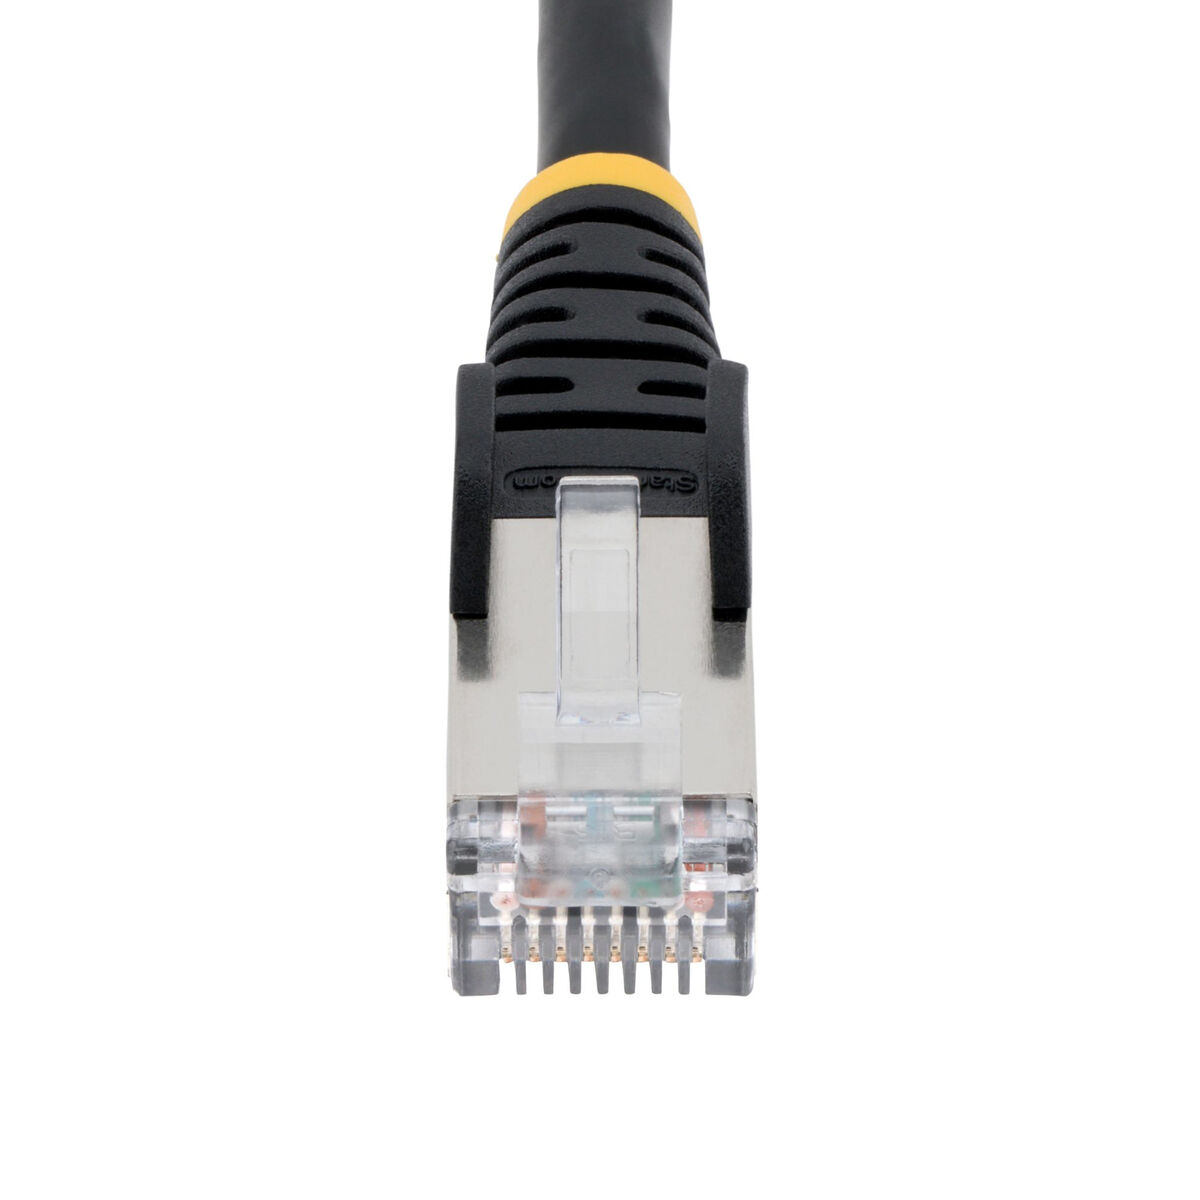 UTP Category 6 Rigid Network Cable Startech NLBK-2M-CAT6A-PATCH